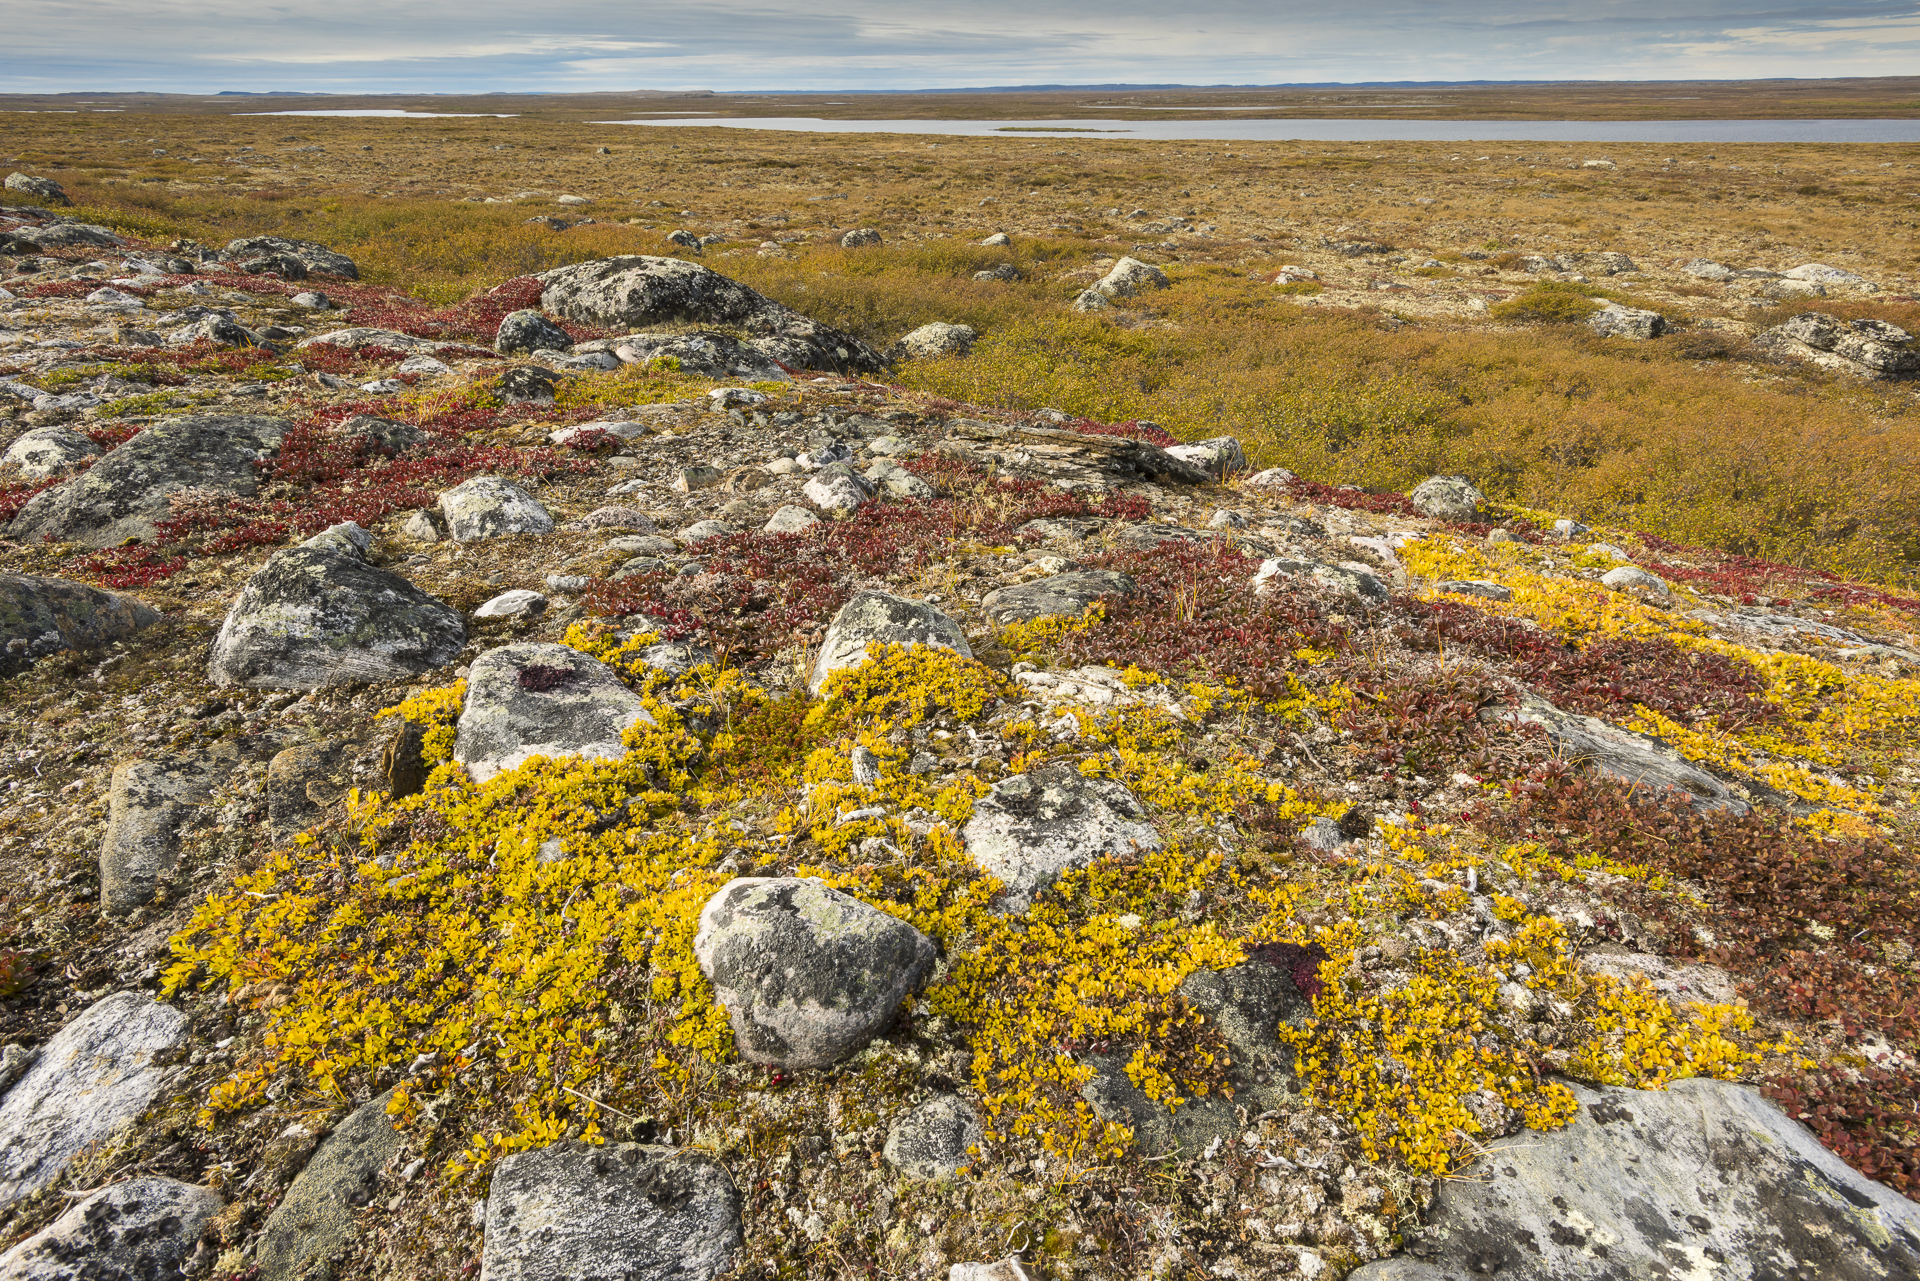 Arctic willows in fall colors: Nunavik region, Canada